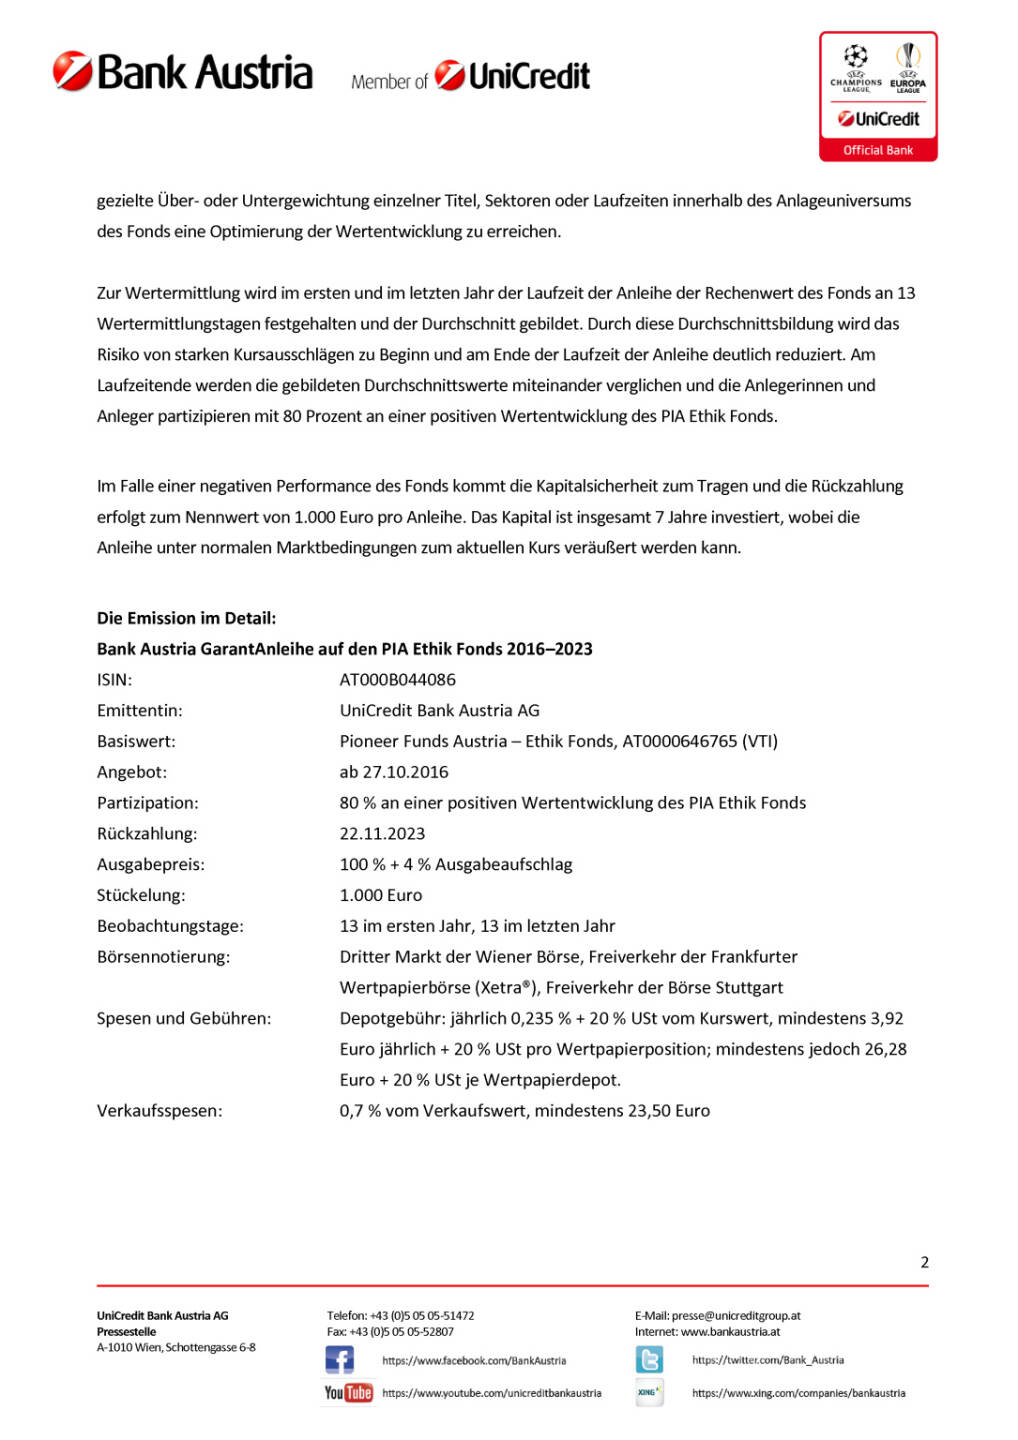 Bank Austria GarantAnleihe Pioneer Ethik Fonds, Seite 2/3, komplettes Dokument unter http://boerse-social.com/static/uploads/file_1942_bank_austria_garantanleihe_pioneer_ethik_fonds.pdf